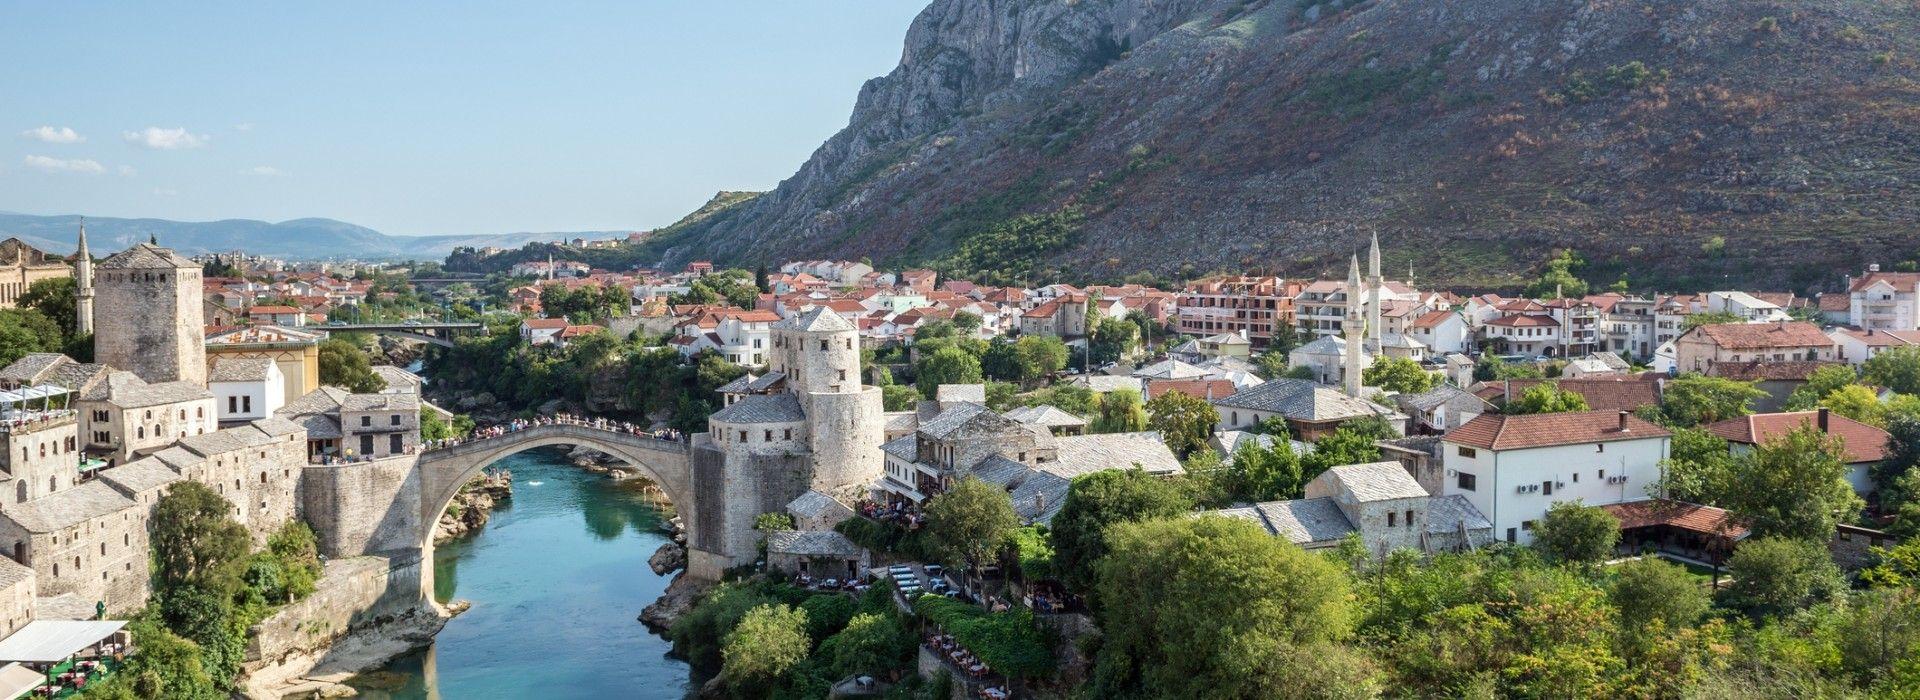 Mostar - stari grad i kameni most